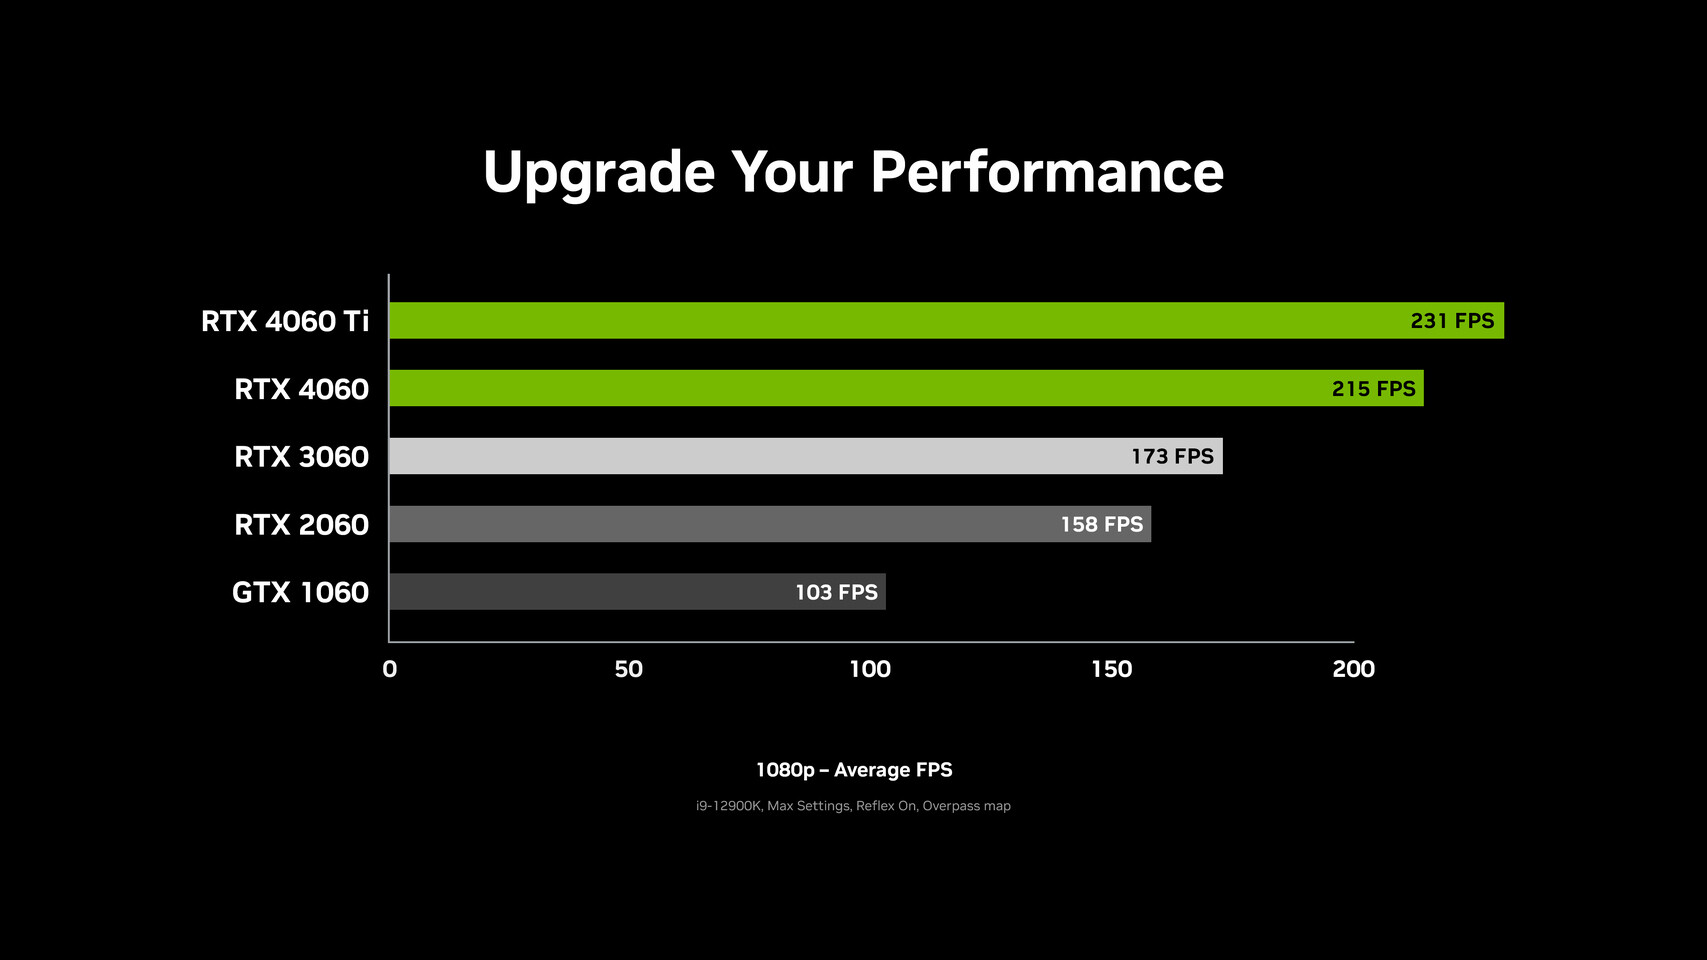 ATI Xbox 360 E GPU Specs  TechPowerUp GPU Database